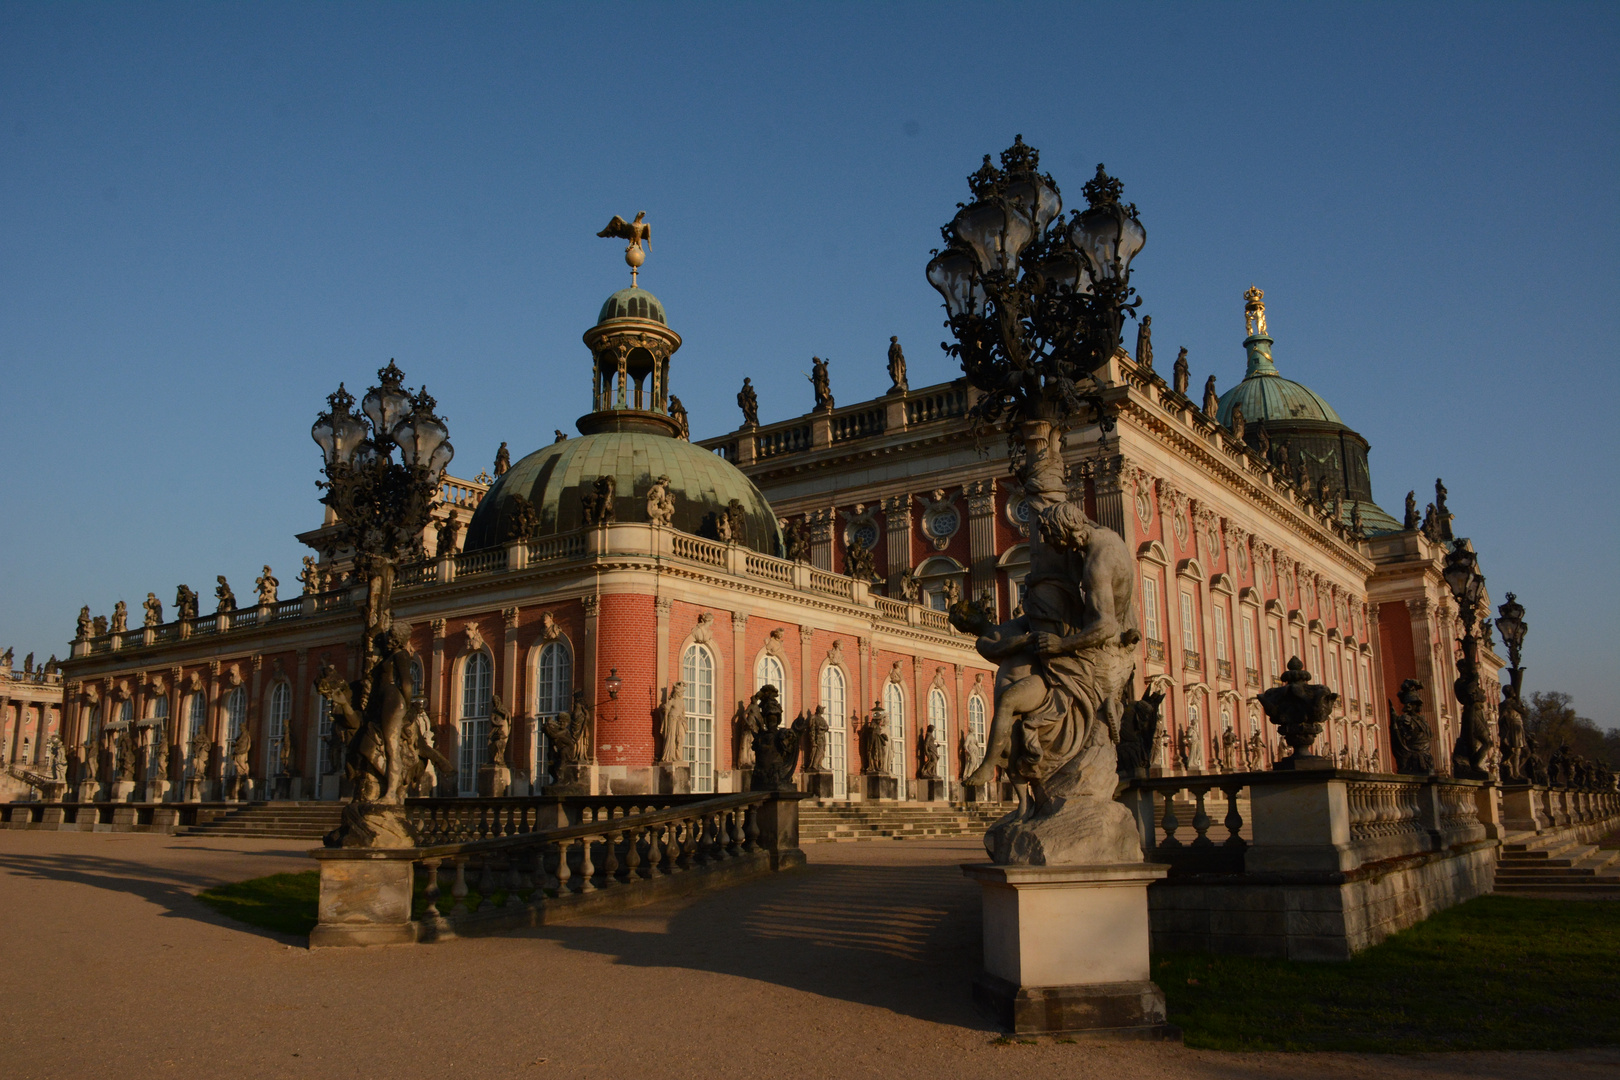 Potsdam - Neues Palais